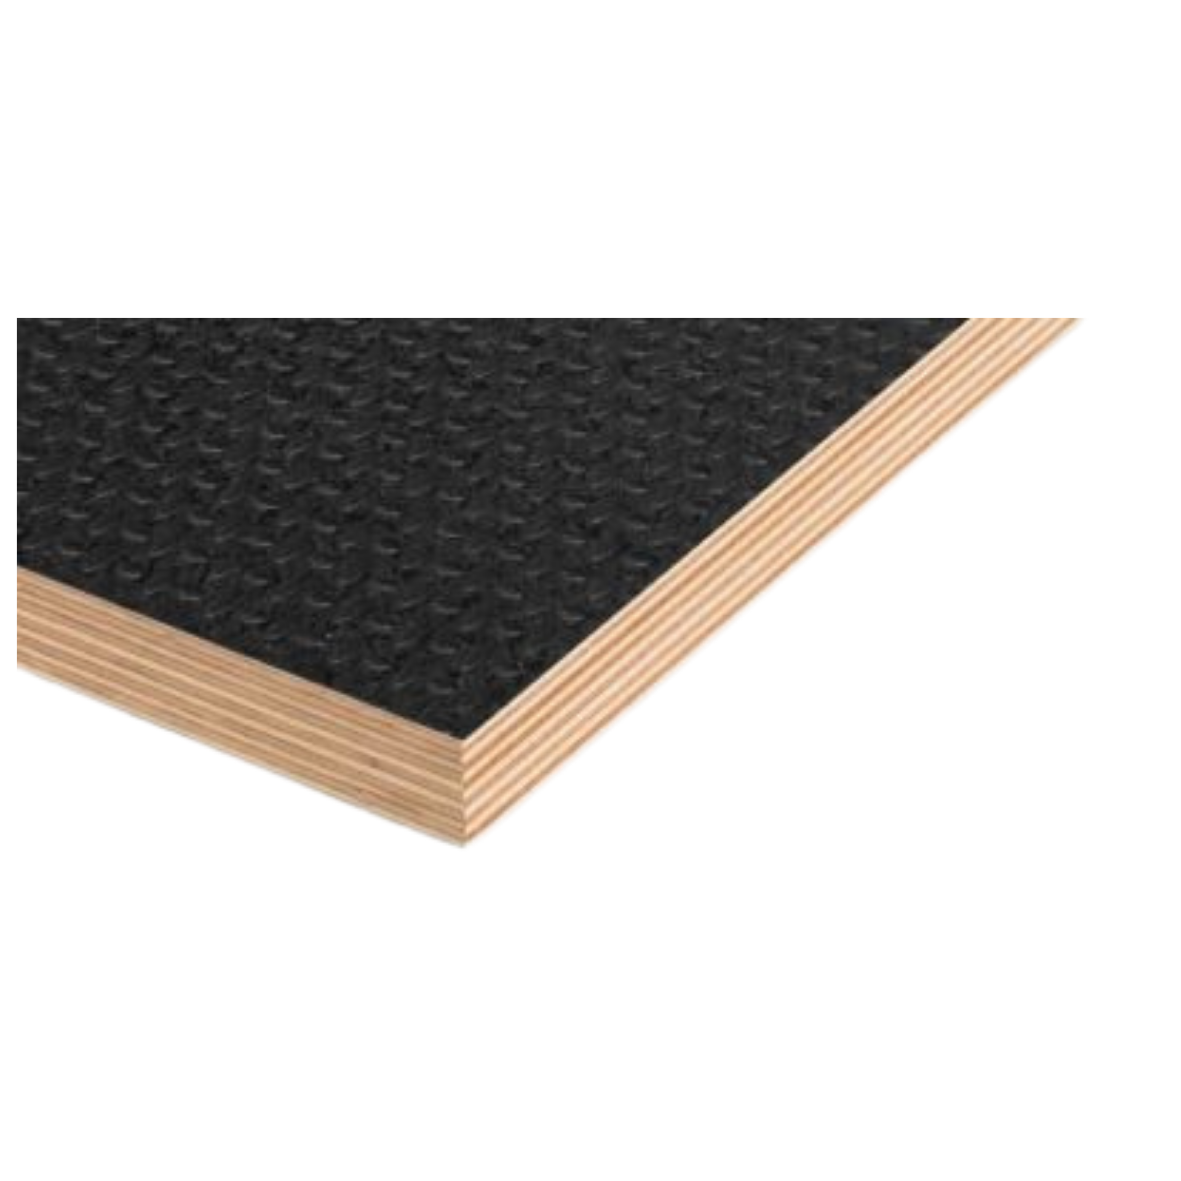 Antiskid playwood - Anti-slip TEGO formwork plywood 9 mm thickness, 1250 x 2500 mm class A, https:maxbau.ro